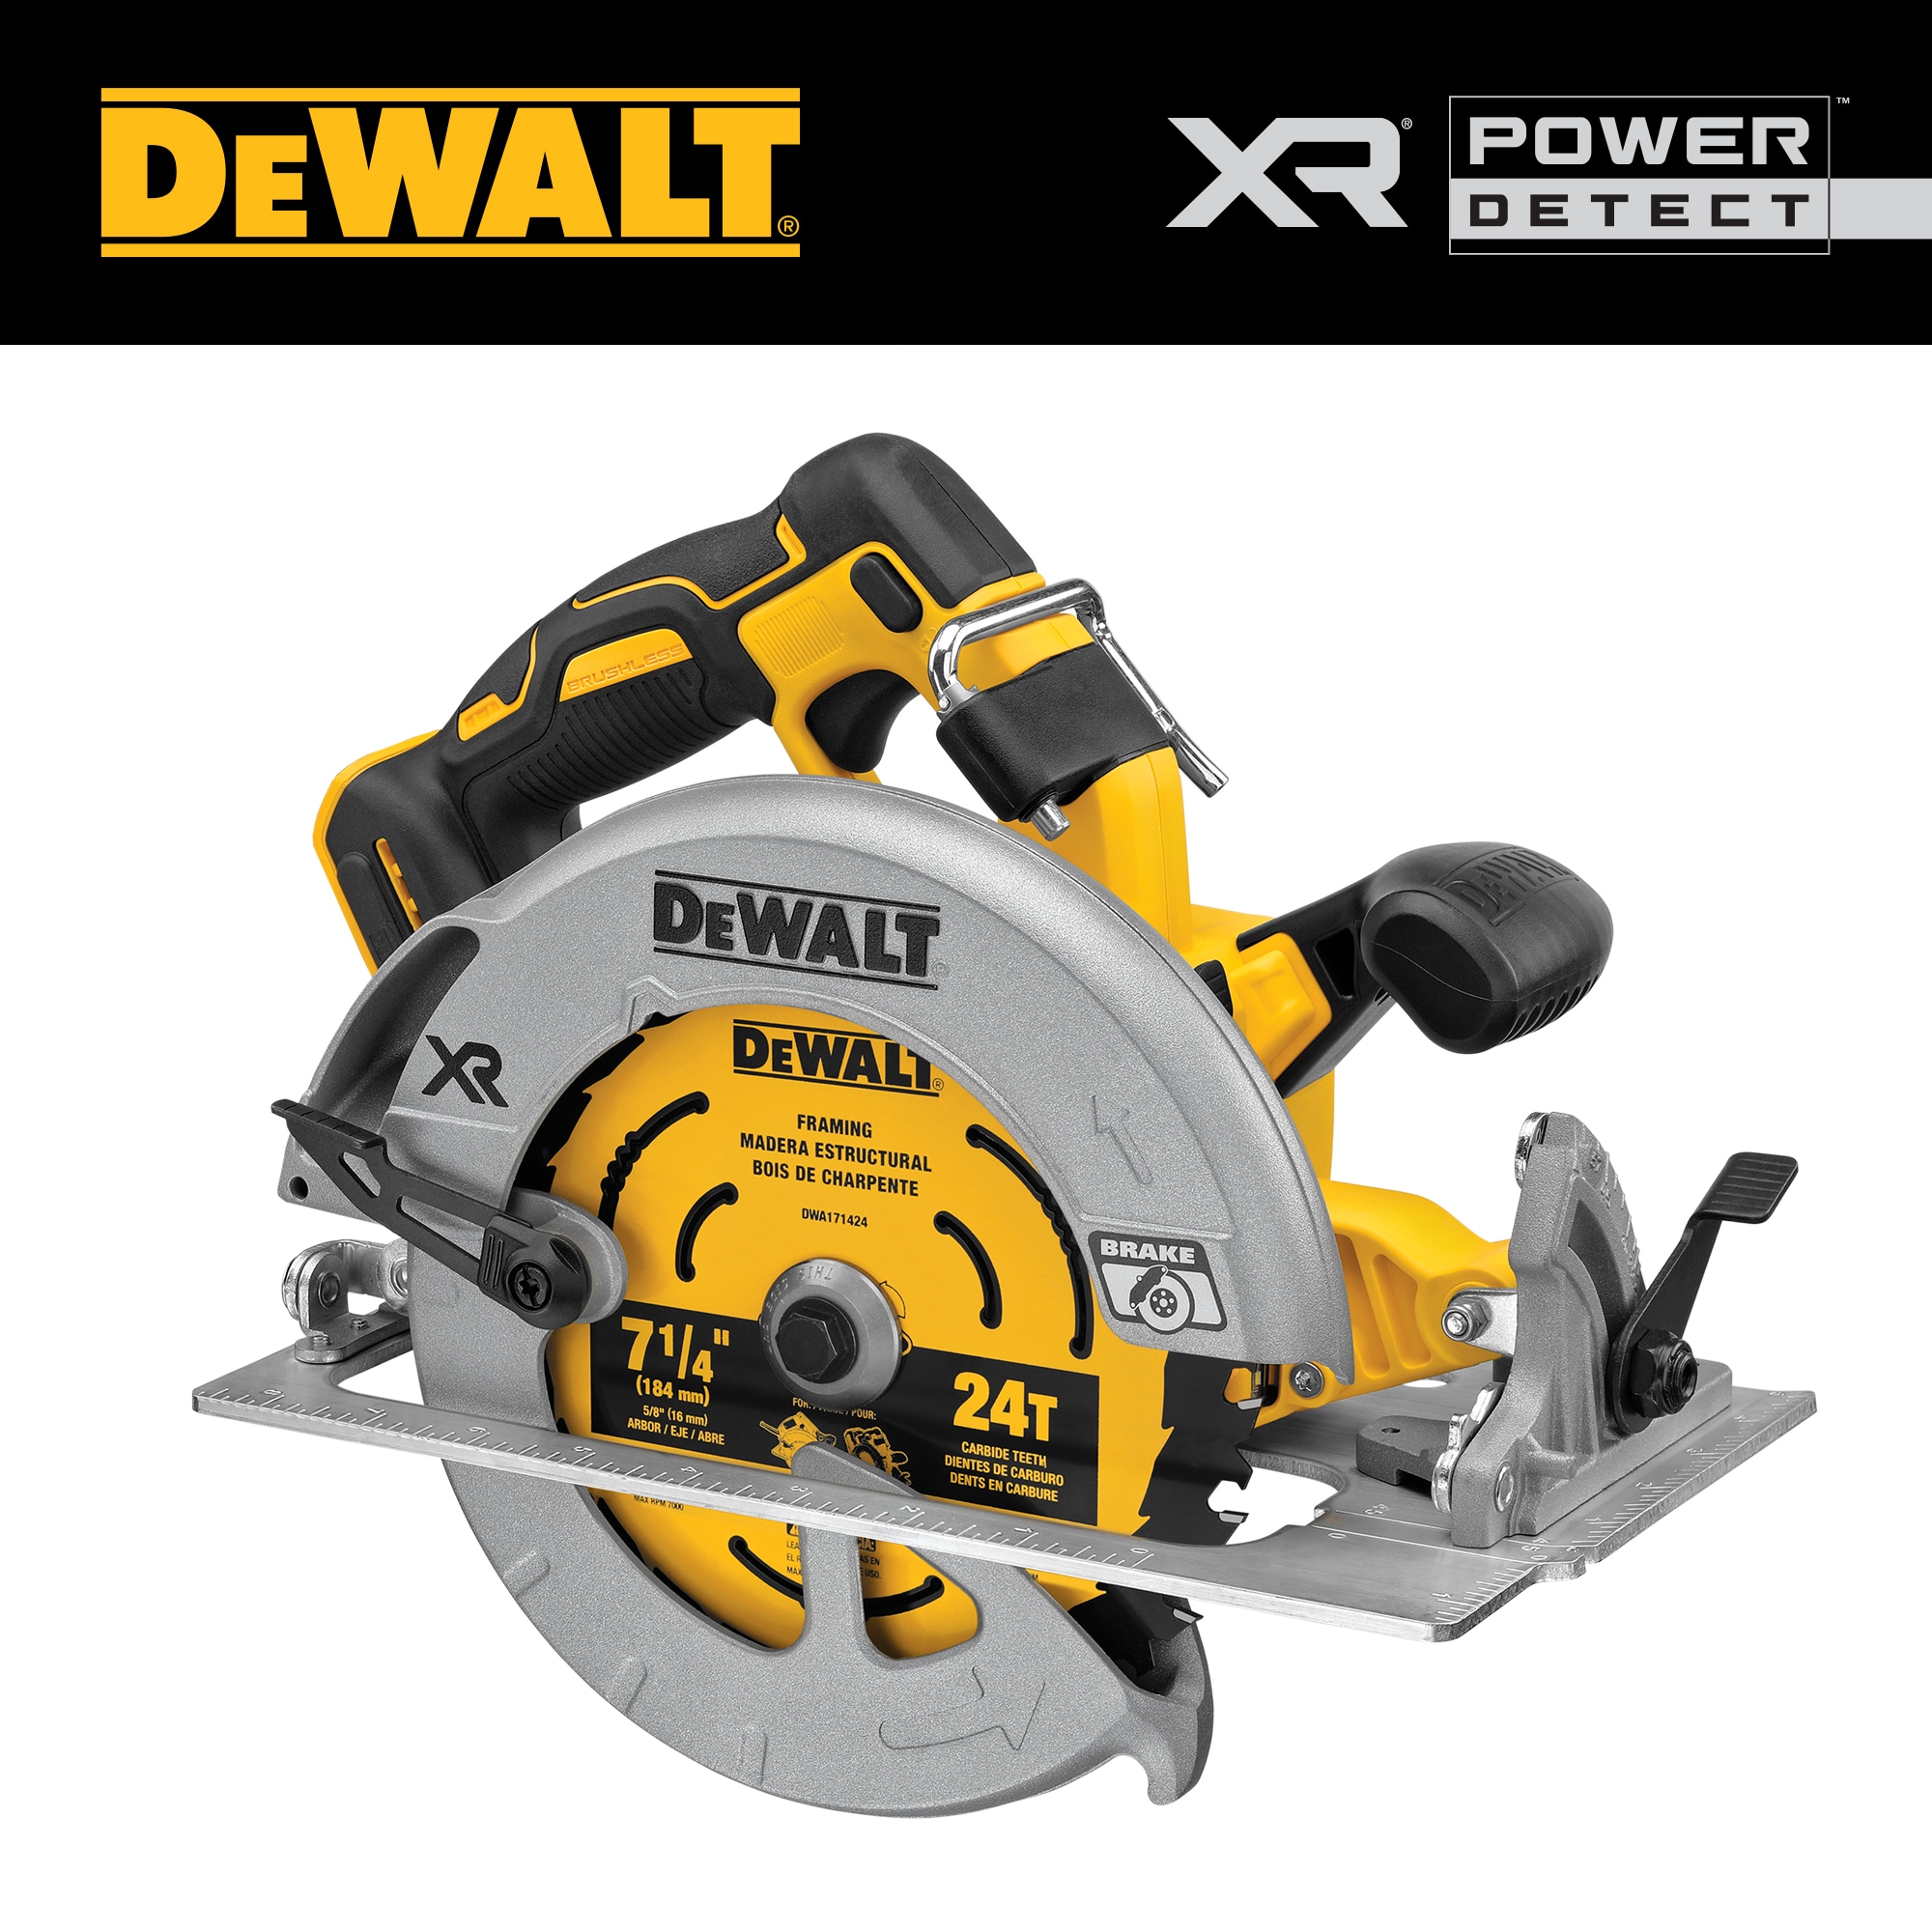 DEWALT XR Power Detect 20-volt Max 7-1/4-in Cordless Circular Saw (Bare Tool)  in the Circular Saws department at